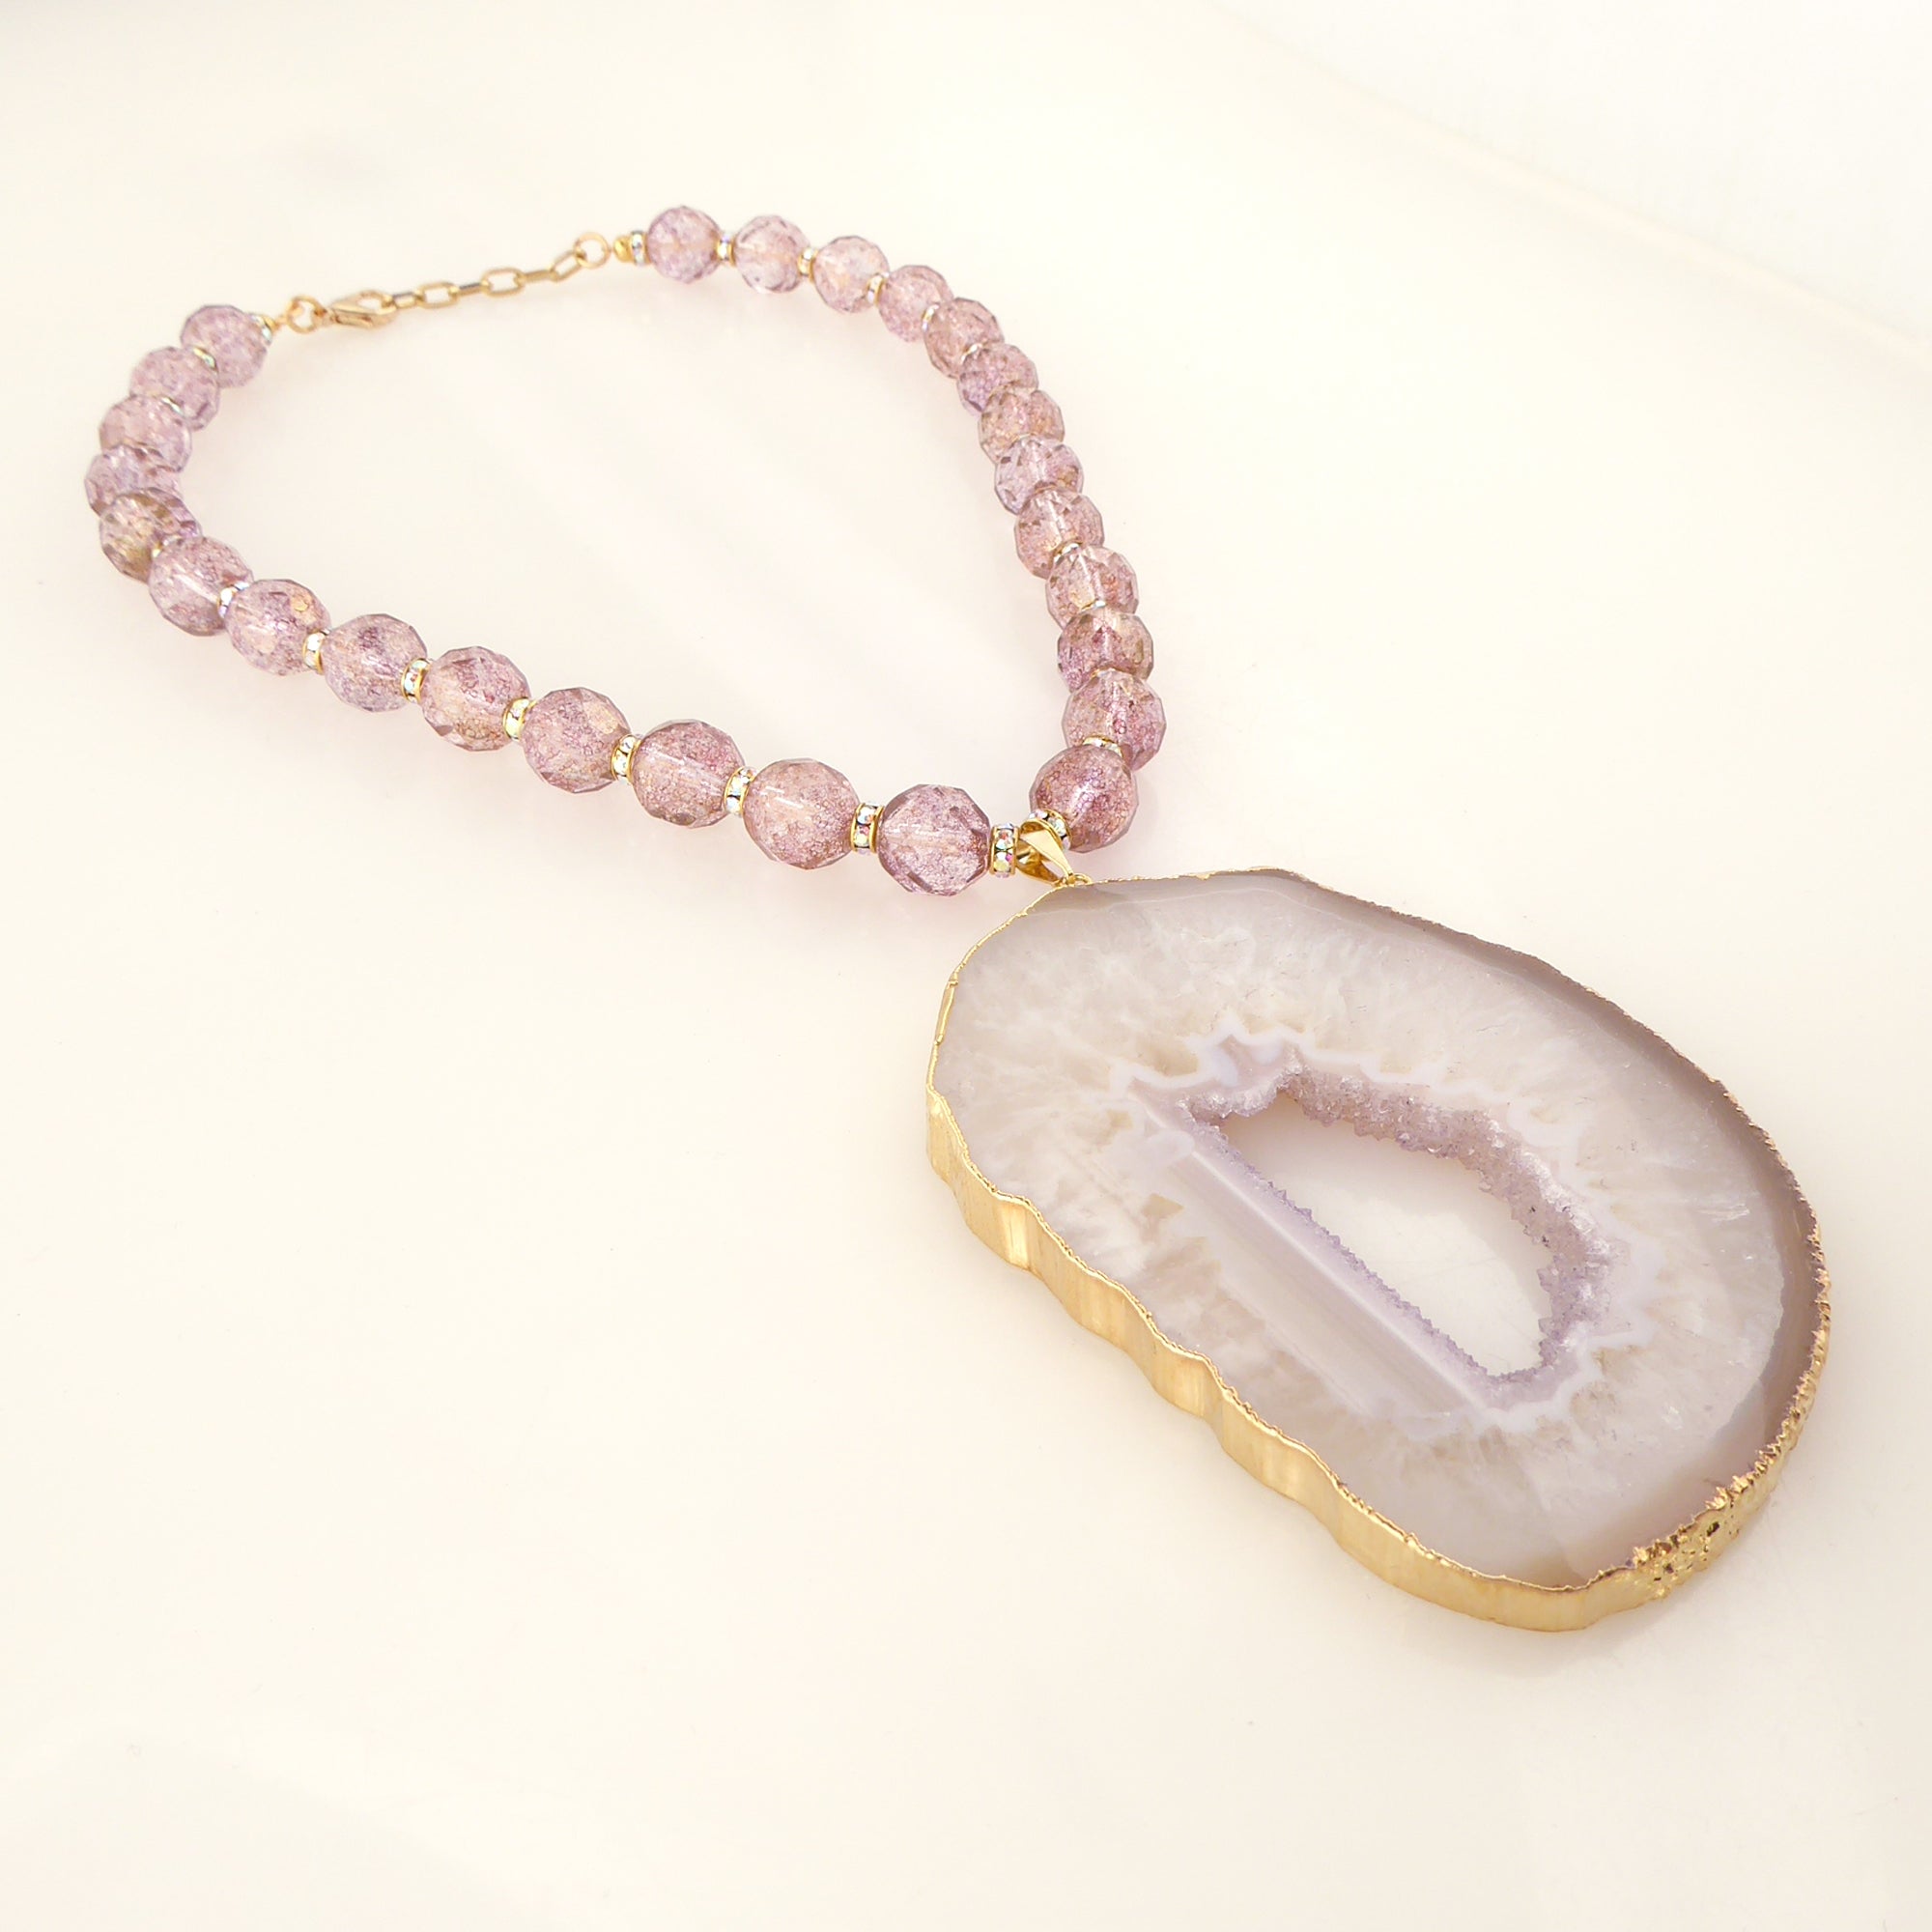 Lavender druzy agate necklace by Jenny Dayco 2